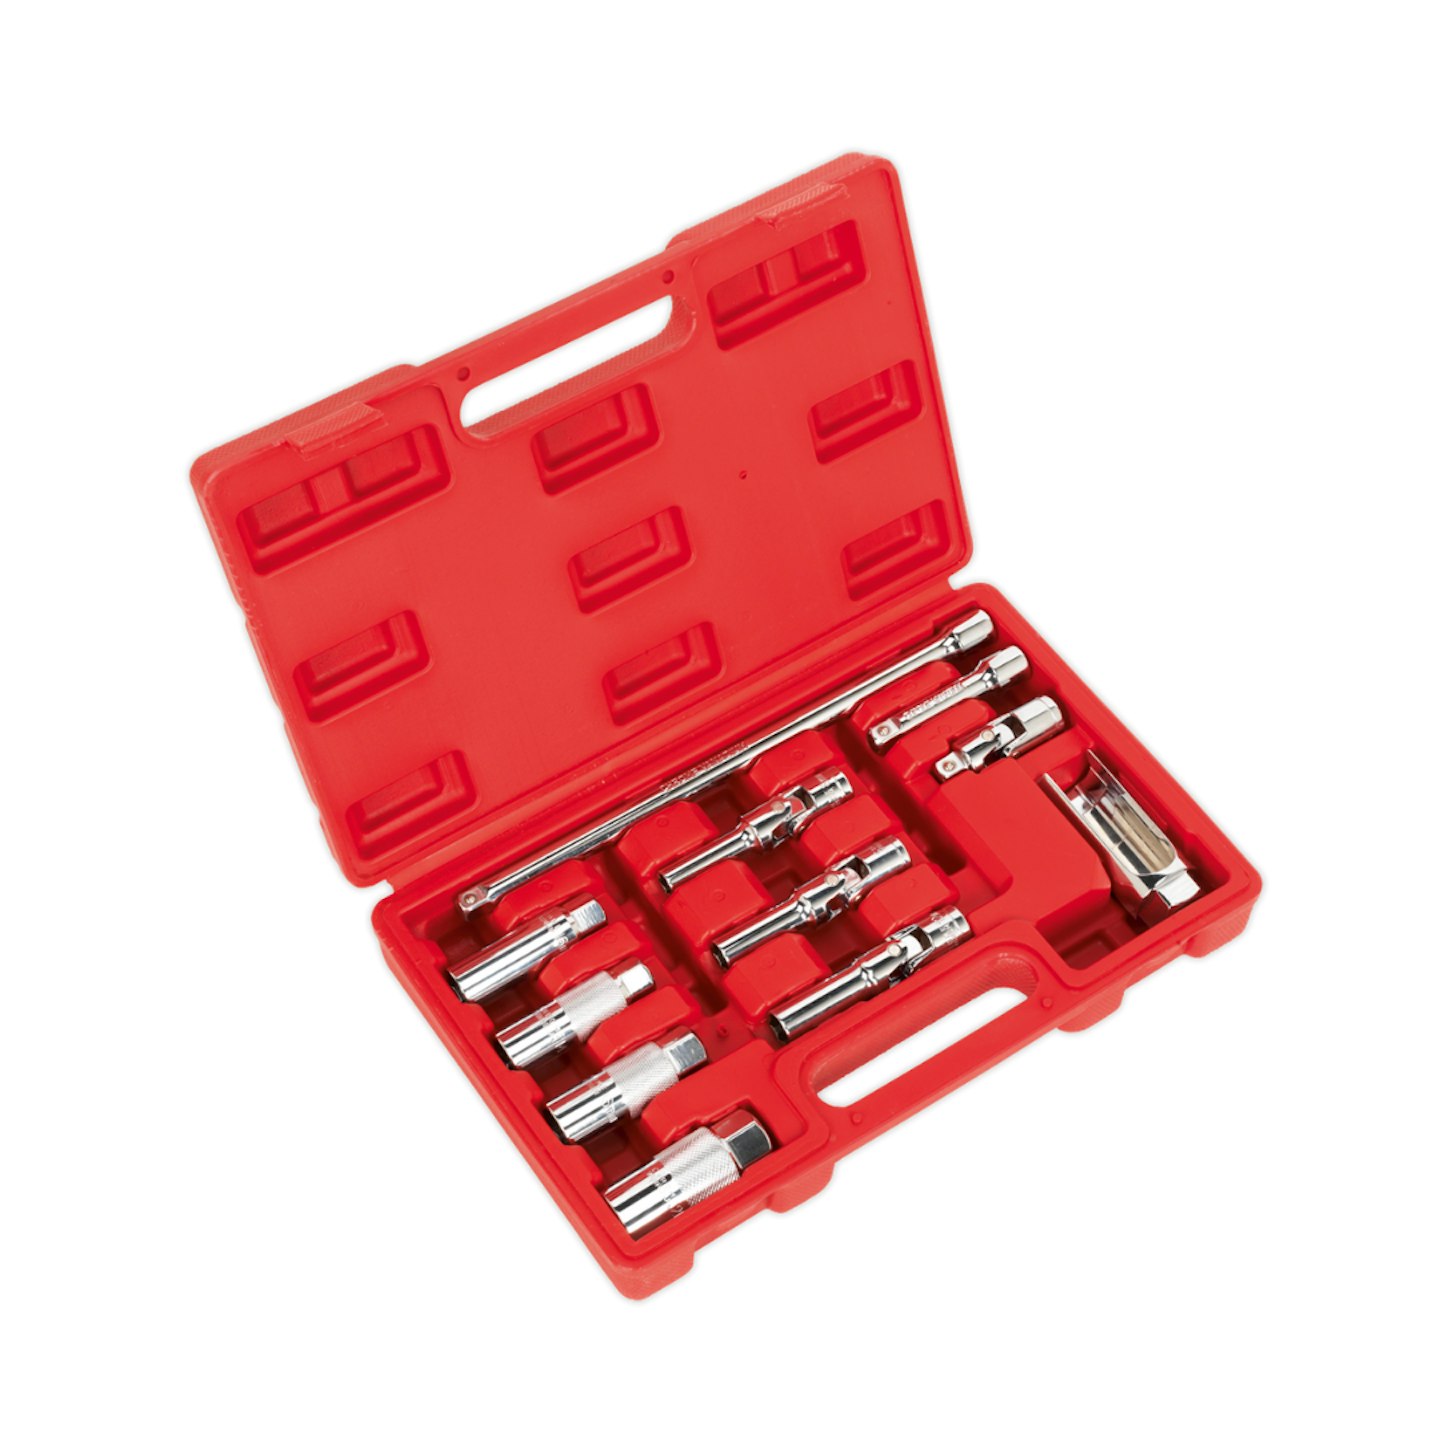 HomeAutomotive ToolsVehicle Repairs & ServicingInjection & Sensor Tools Sealey 11 Piece 3/8" Drive Master Spark/Glow Plug and Oxygen Sensor Service Set